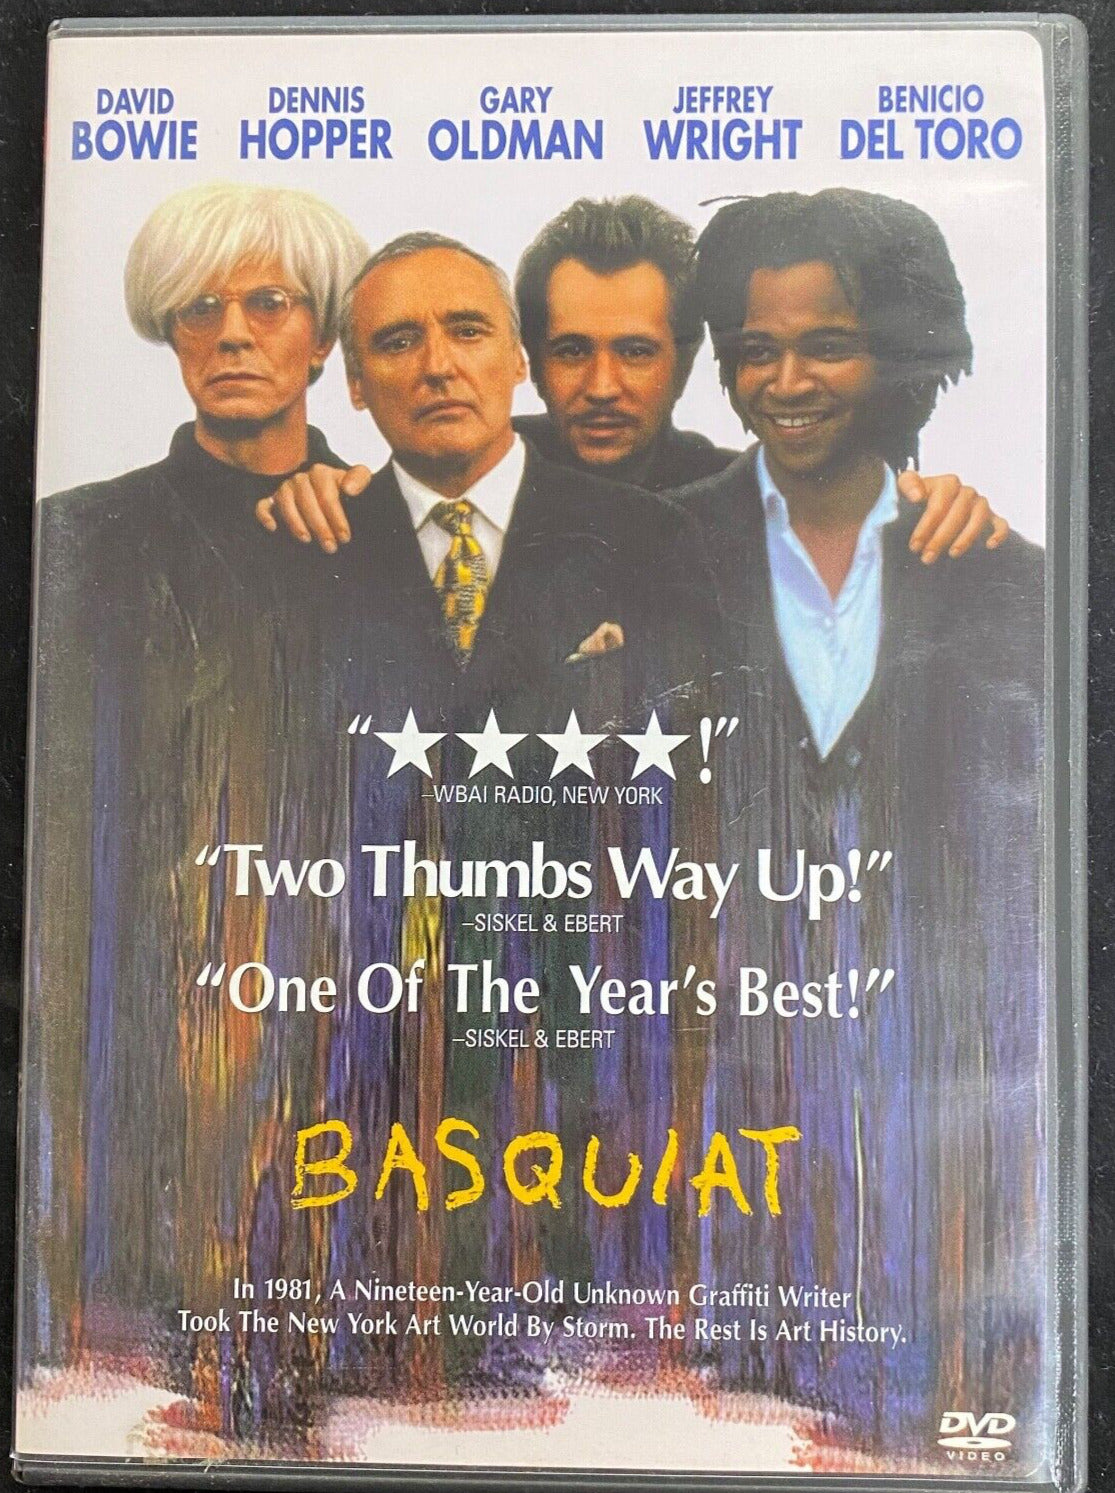 BASQUIAT - DVD (David Bowie, Dennis Hopper, Benicio Del Toro) Julien Schnabel